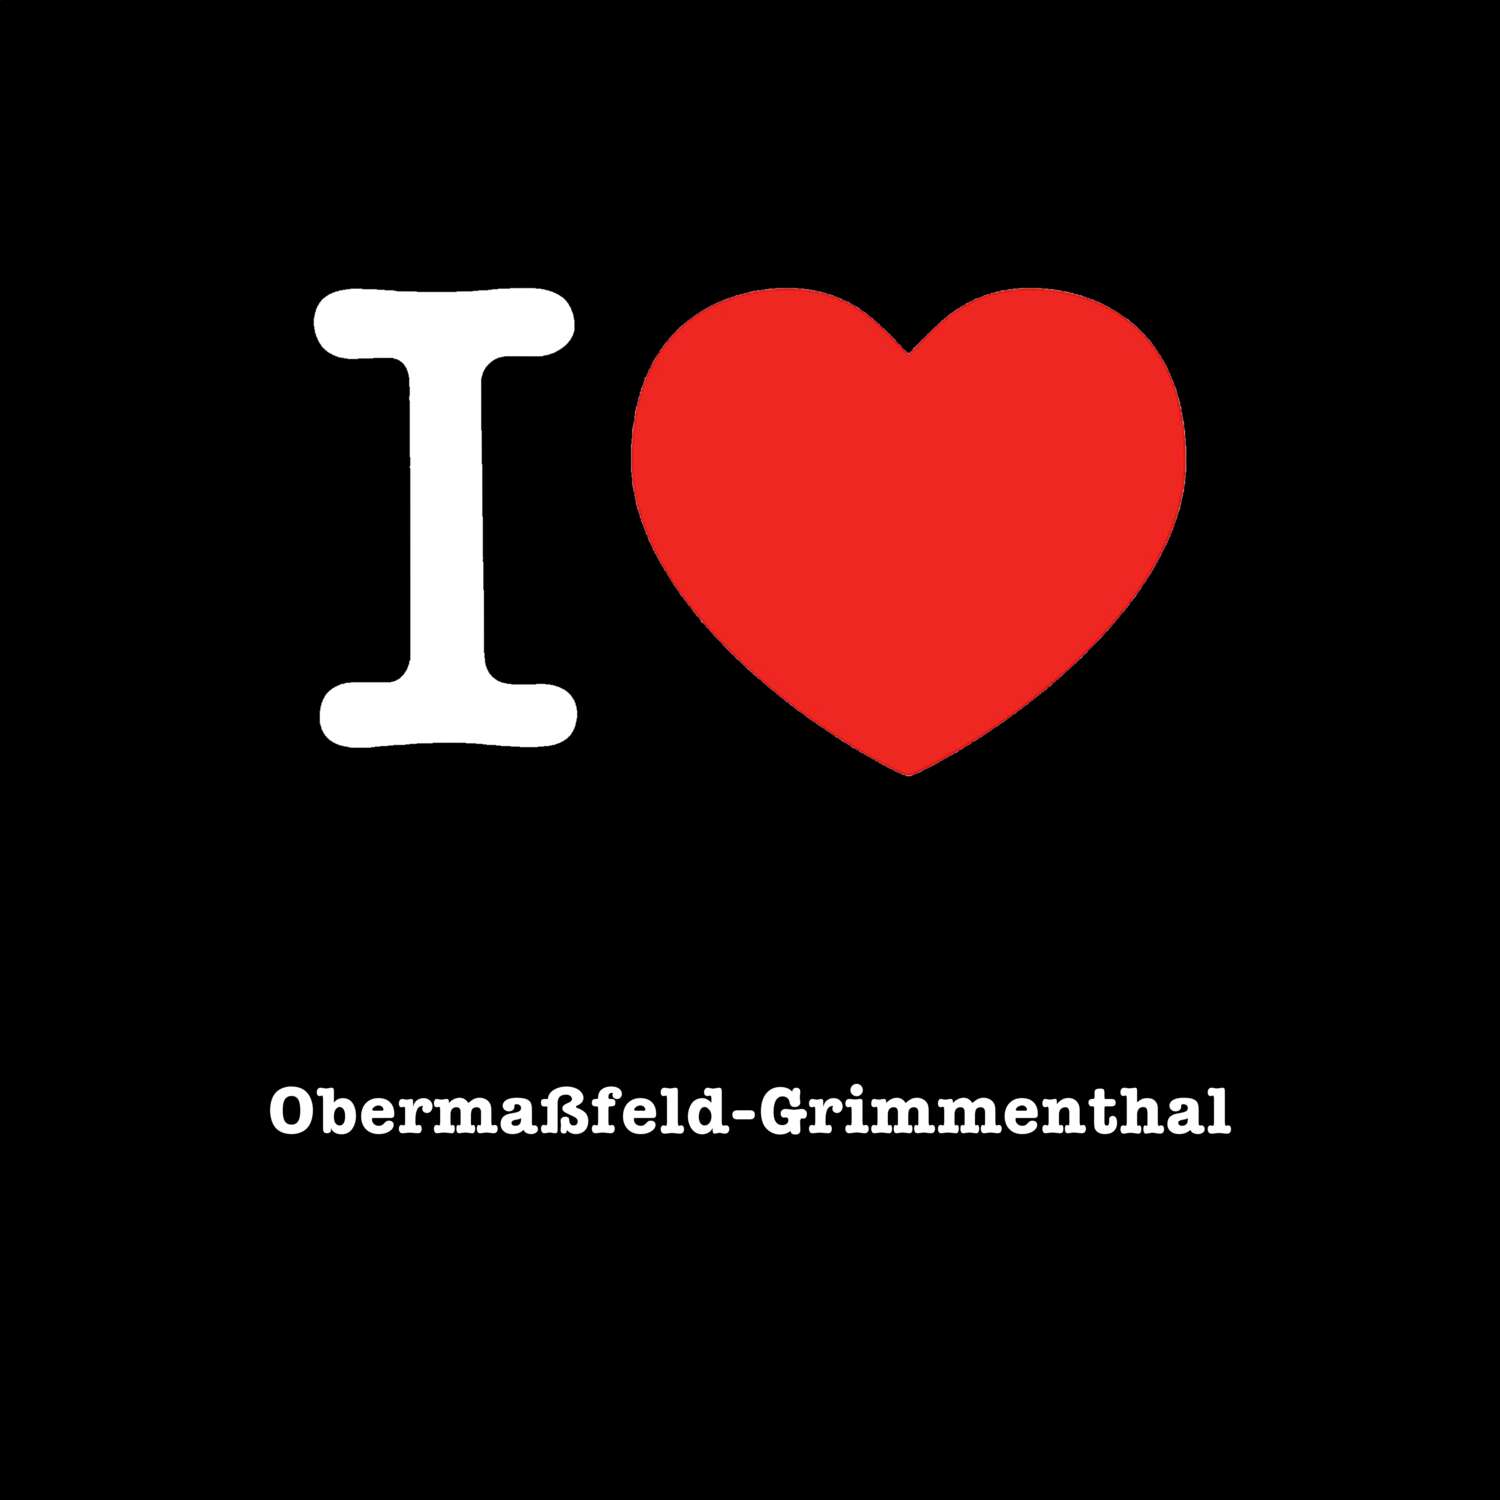 Obermaßfeld-Grimmenthal T-Shirt »I love«